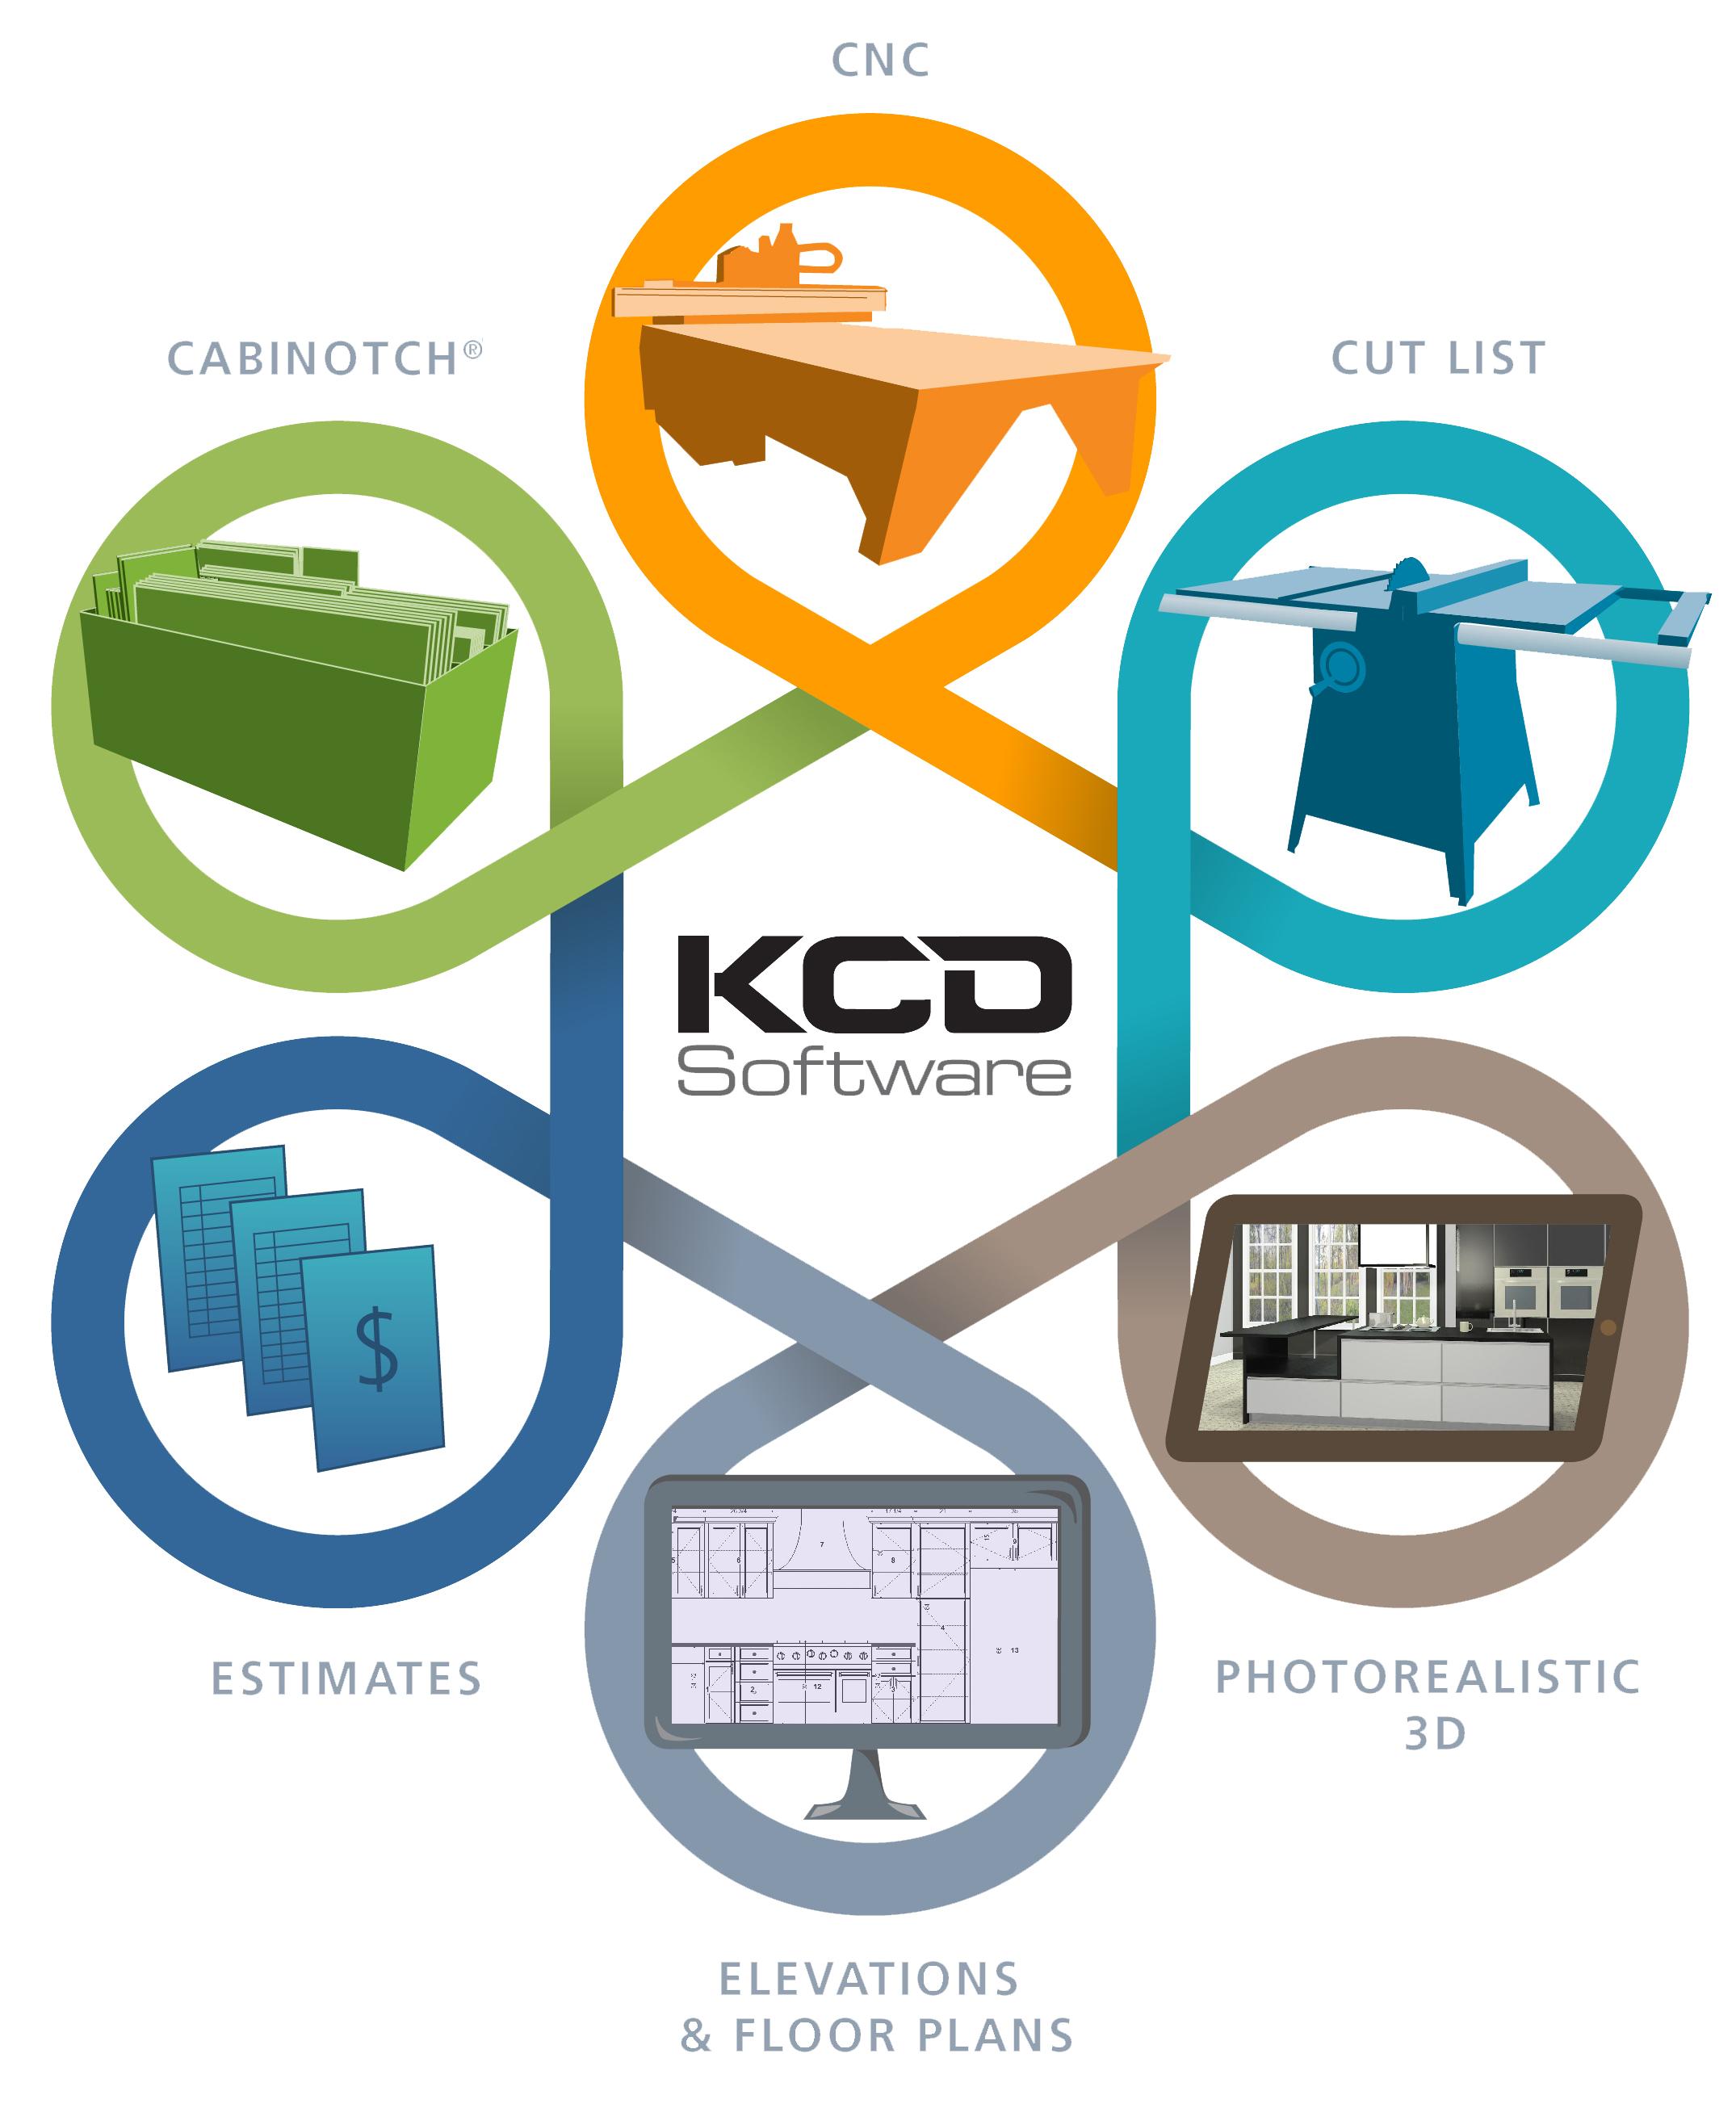 kcd-software-workflow.jpg